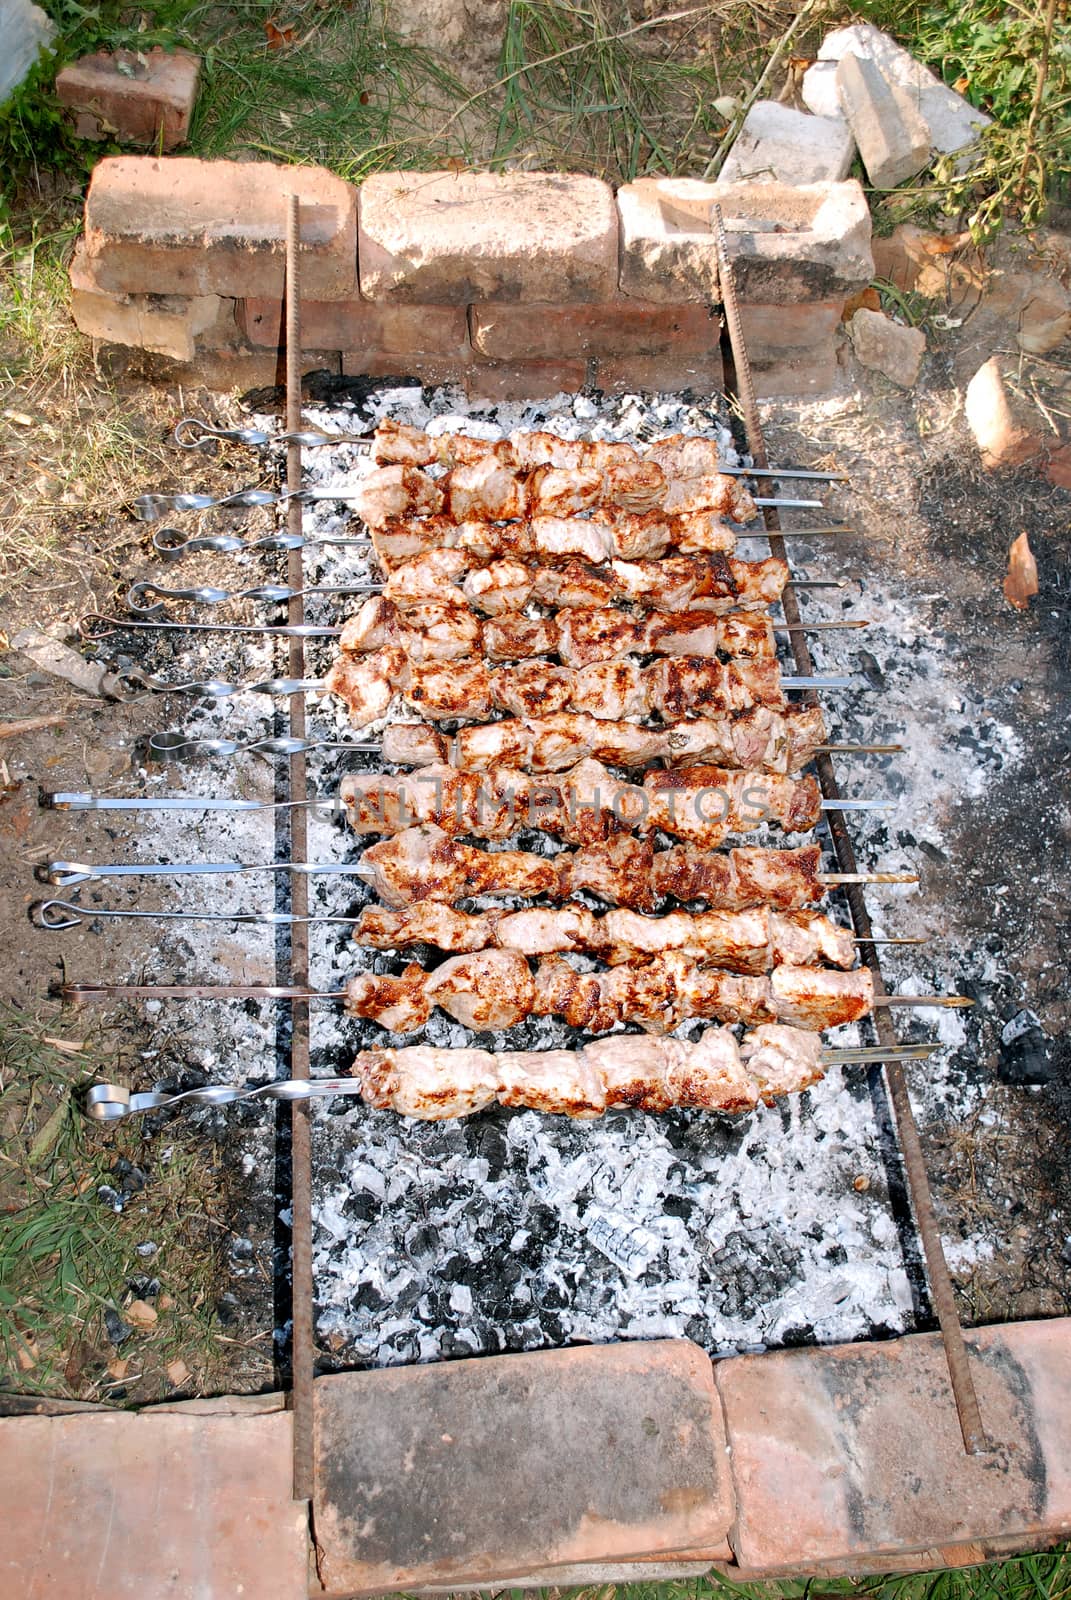 kebabs lying on metal rods and burning embers